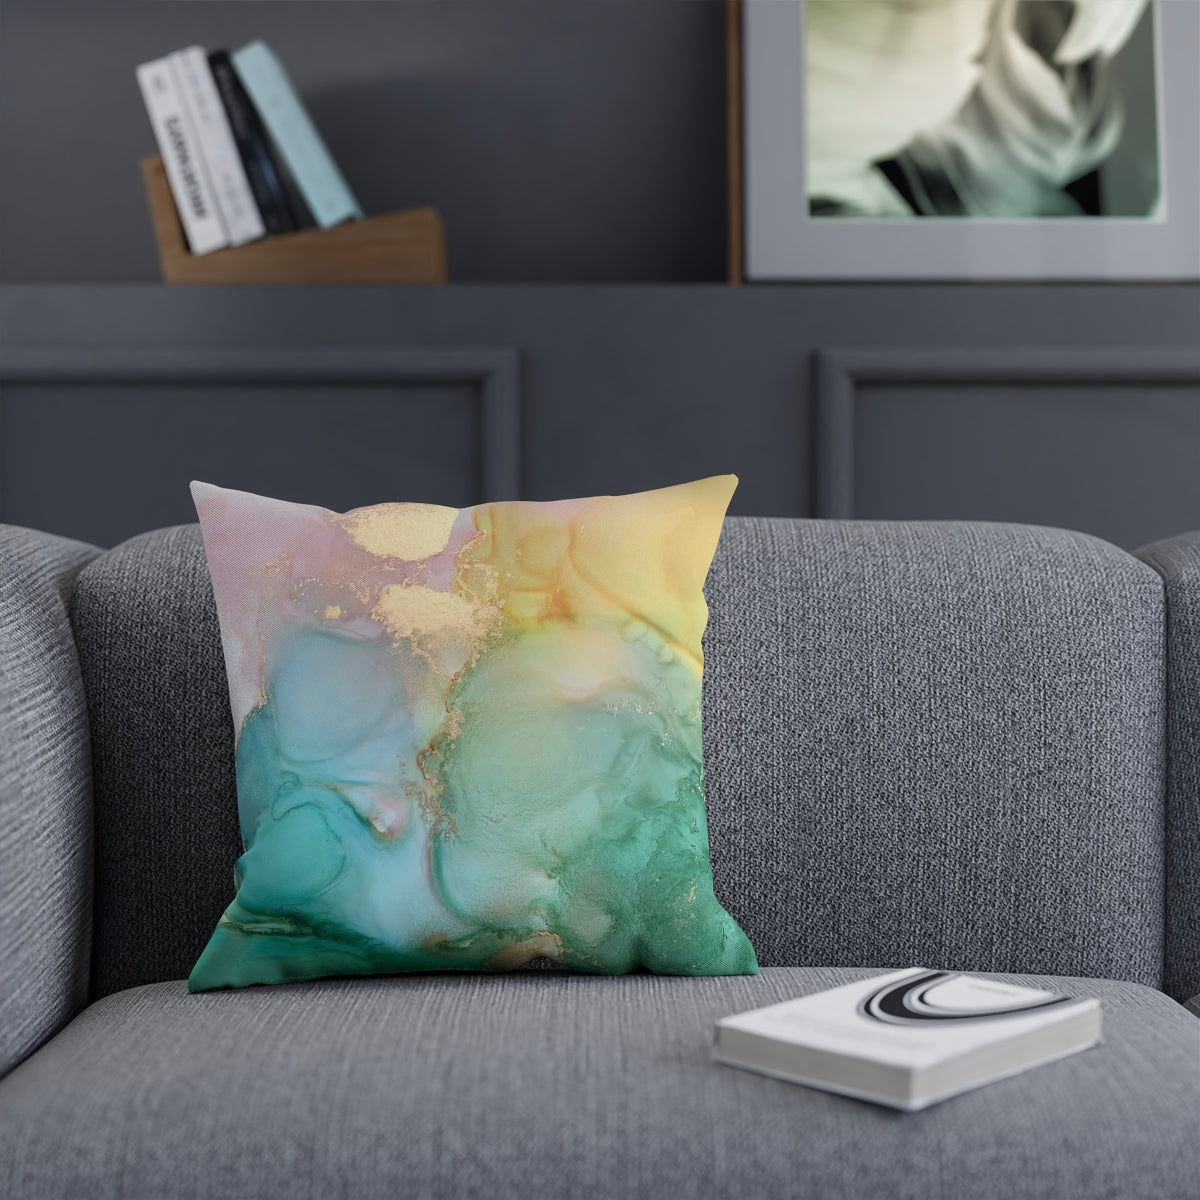 "Ethereal Bloom" Cushion